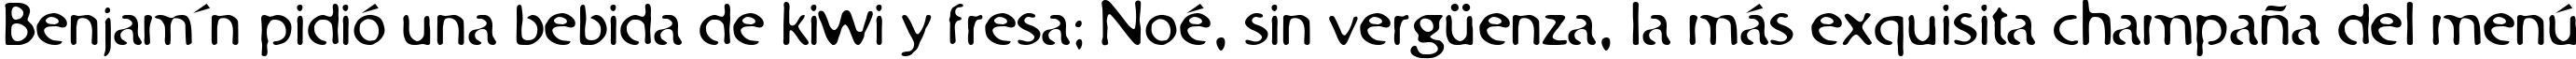 Пример написания шрифтом Bastard текста на испанском